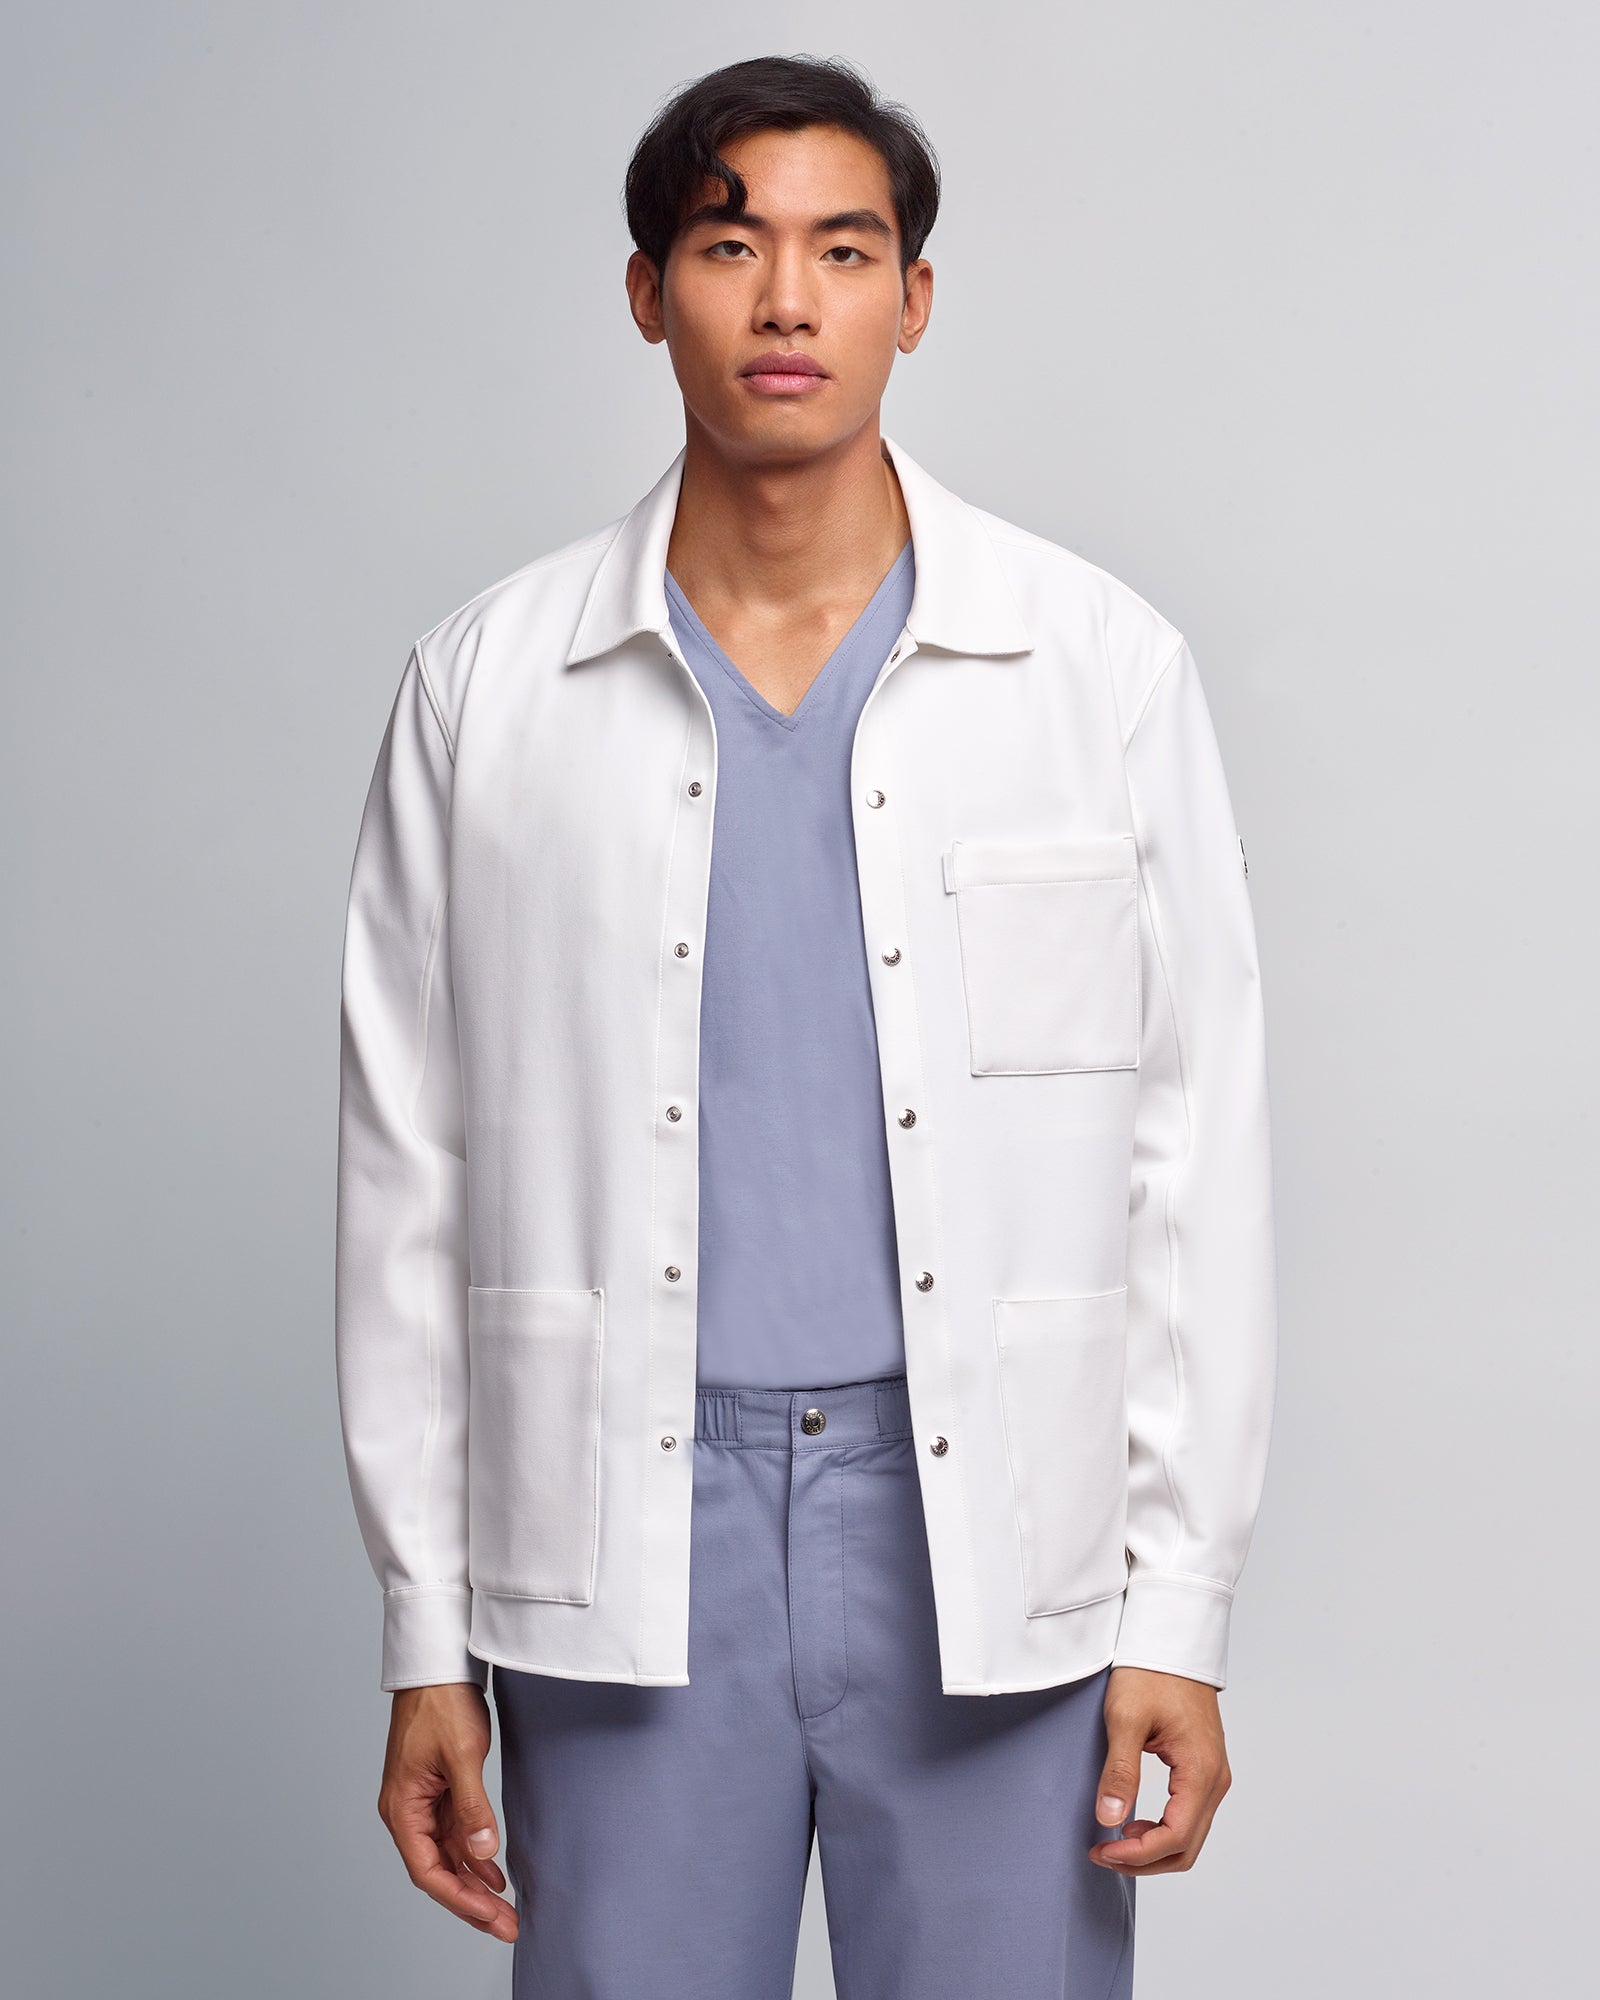 Men's 5-Pocket Doctor's Shirt